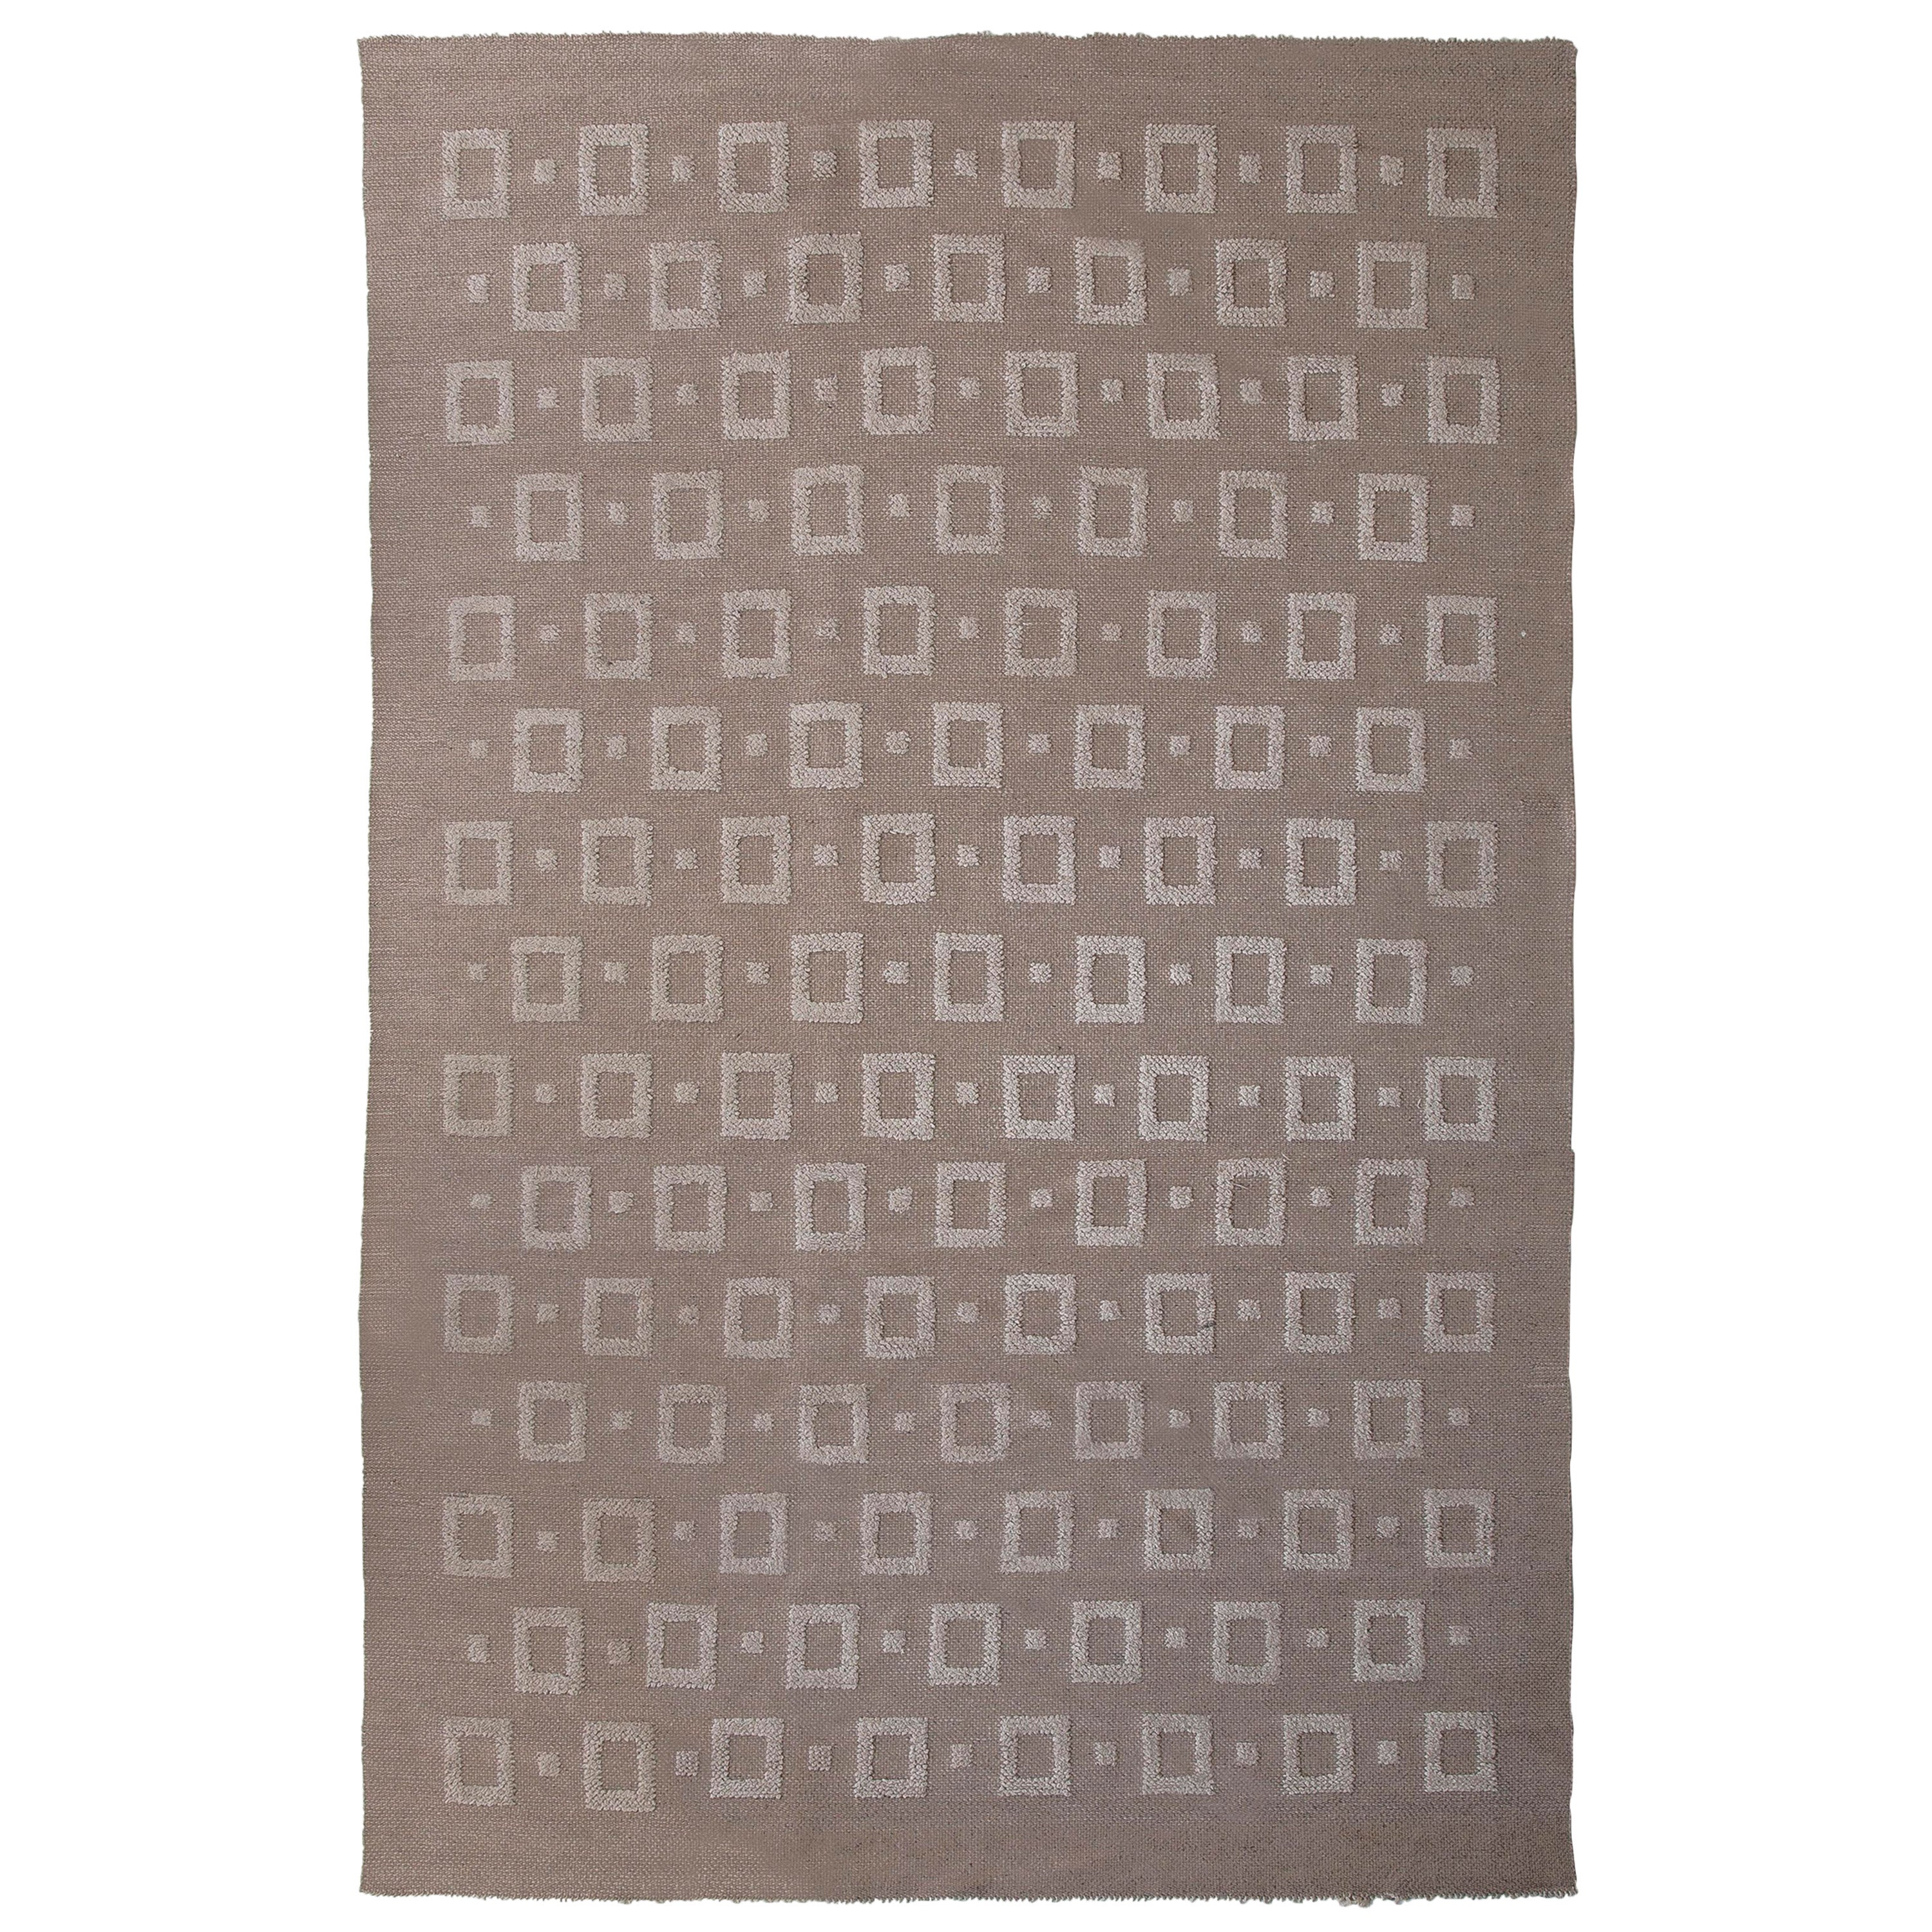 Finnish Modernist 114" Carpet or Rug, Handwoven